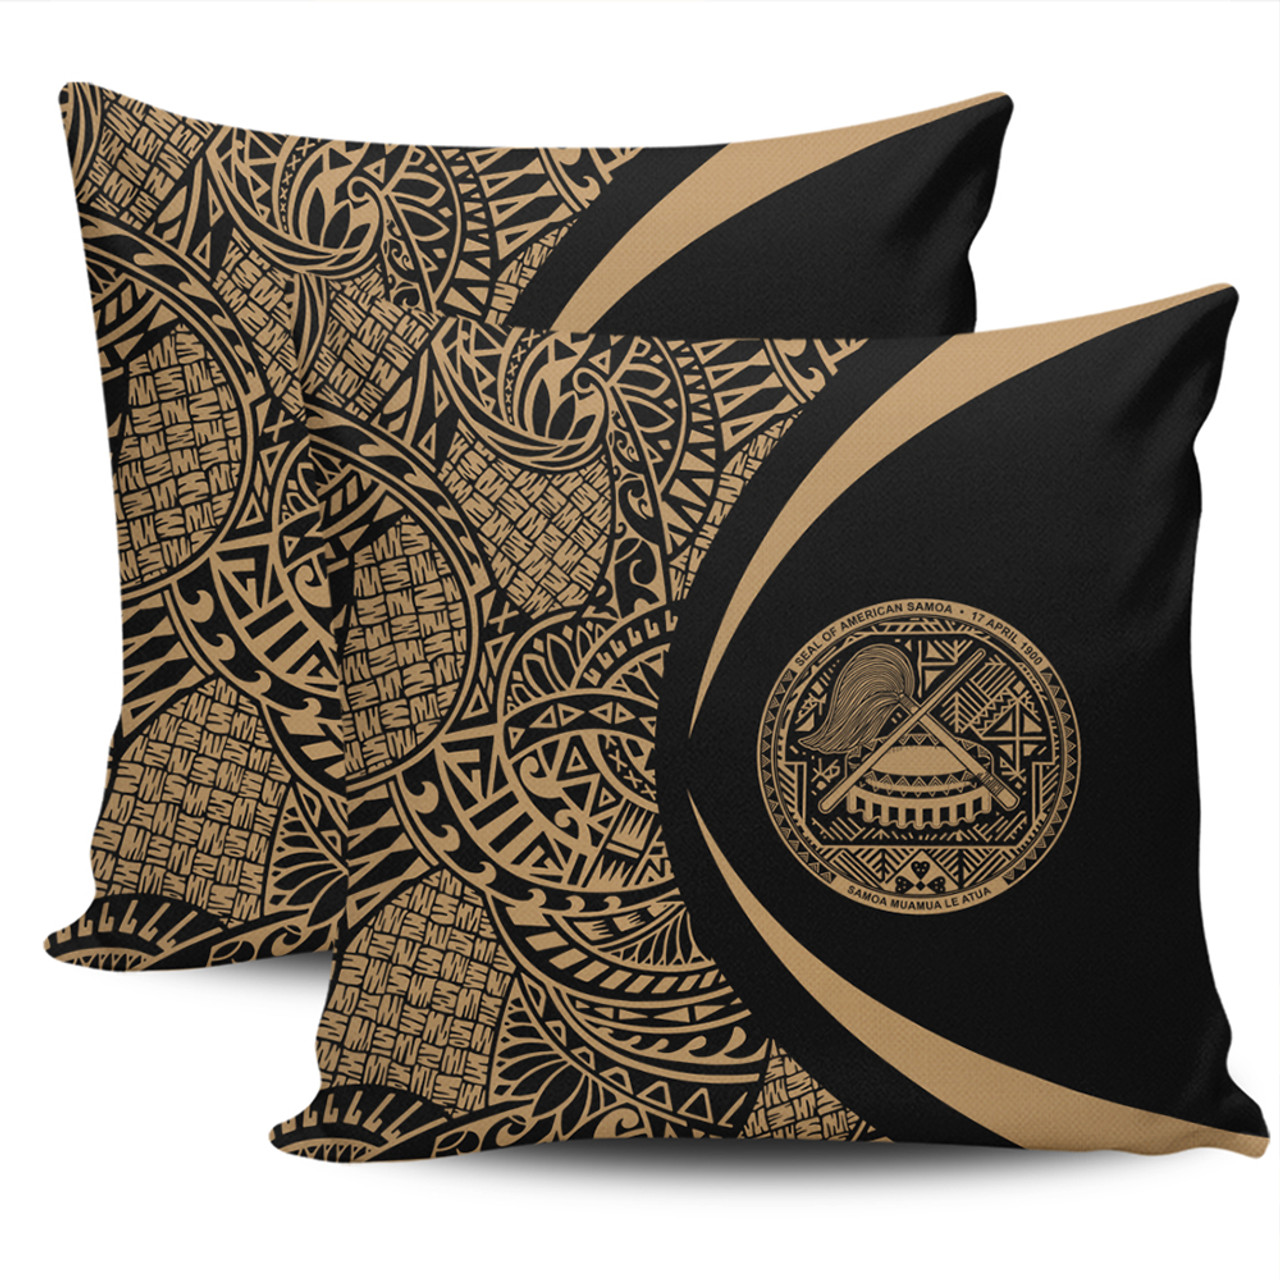 American Samoa Pillow Cover Lauhala Gold Circle Style